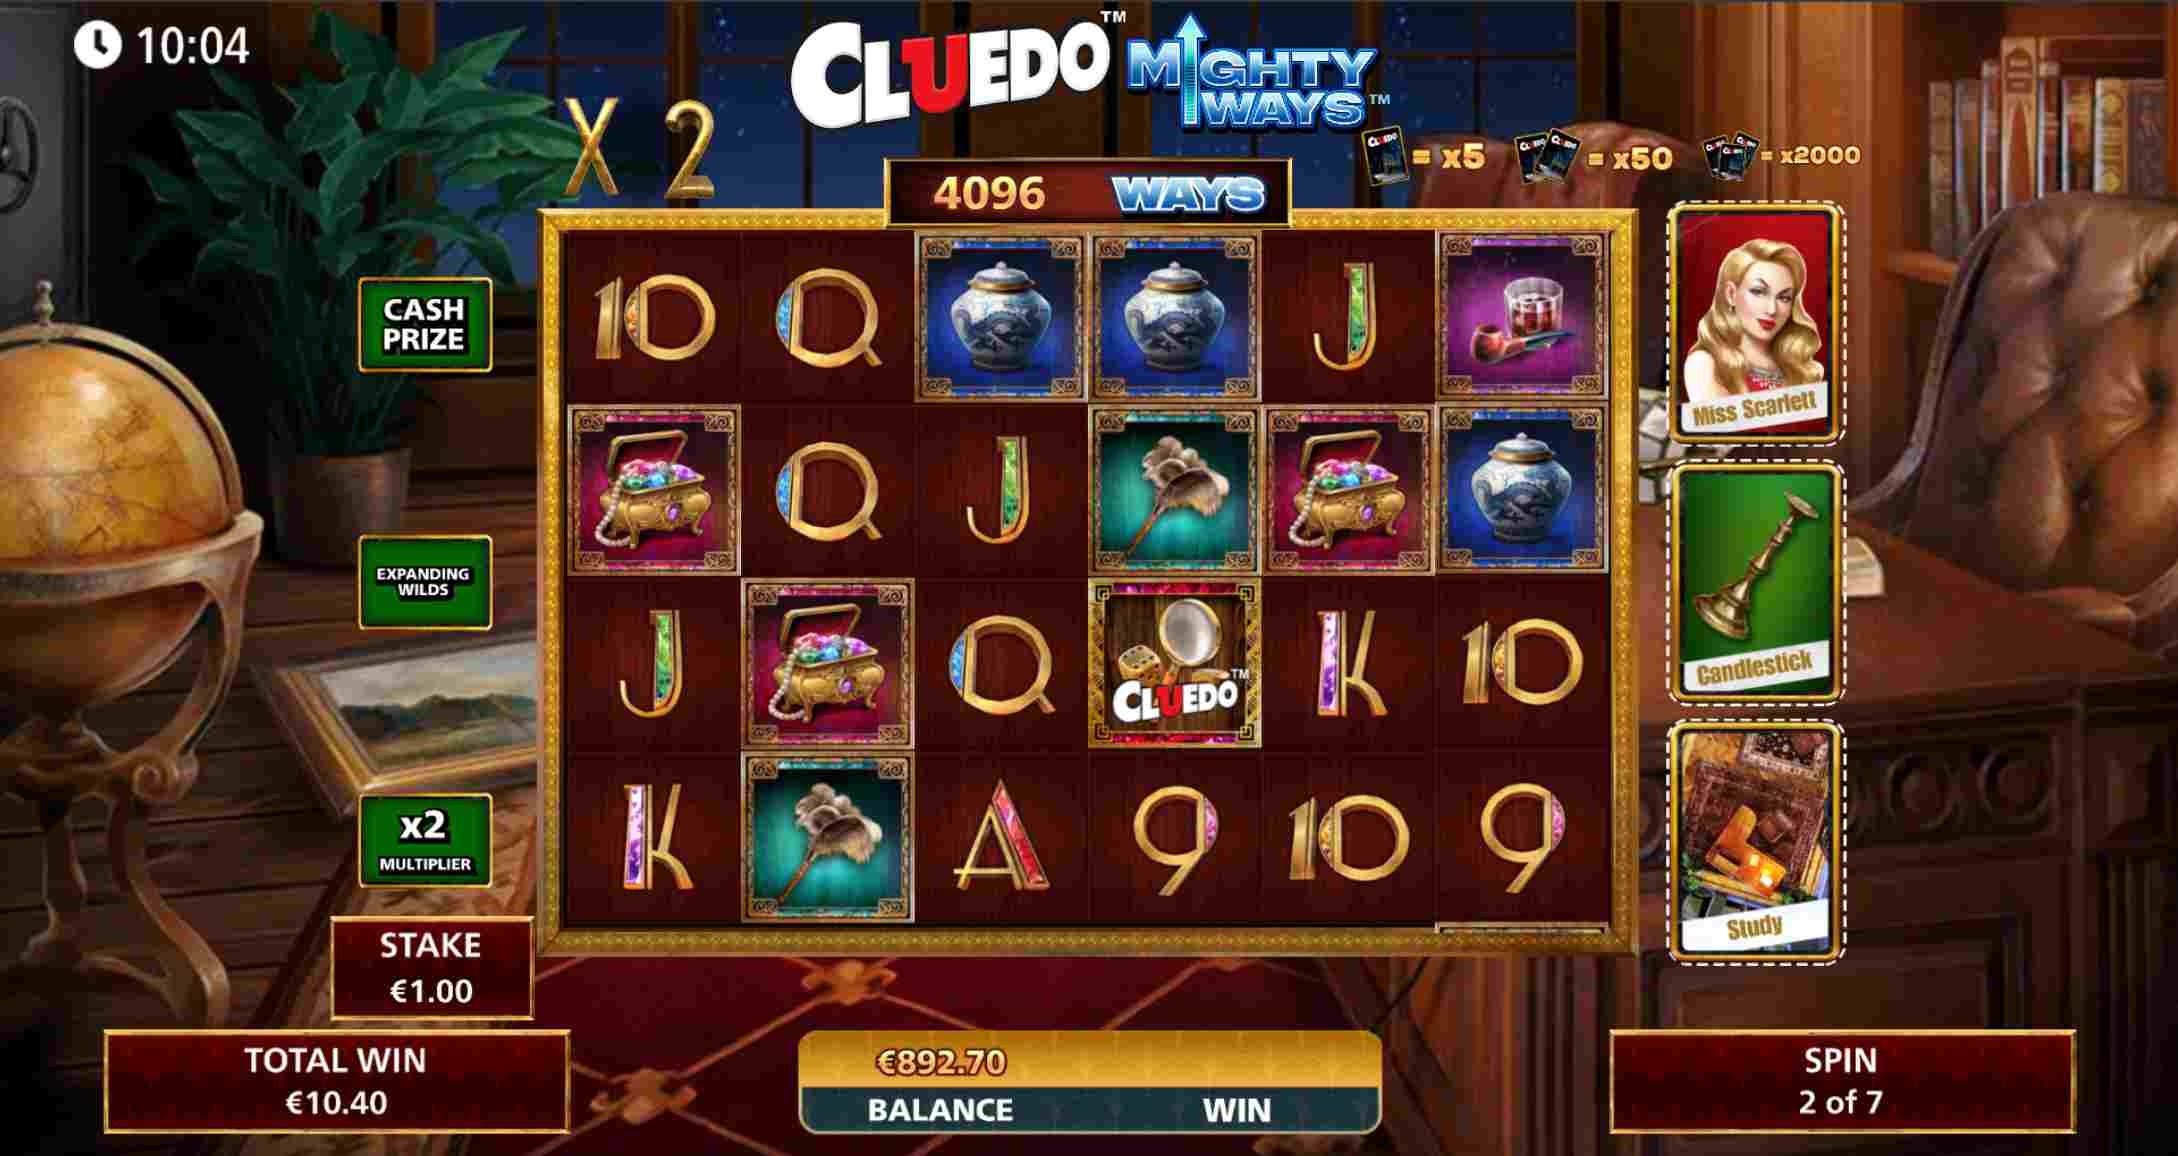 Cluedo Mighty Ways Free Spins Screenshot